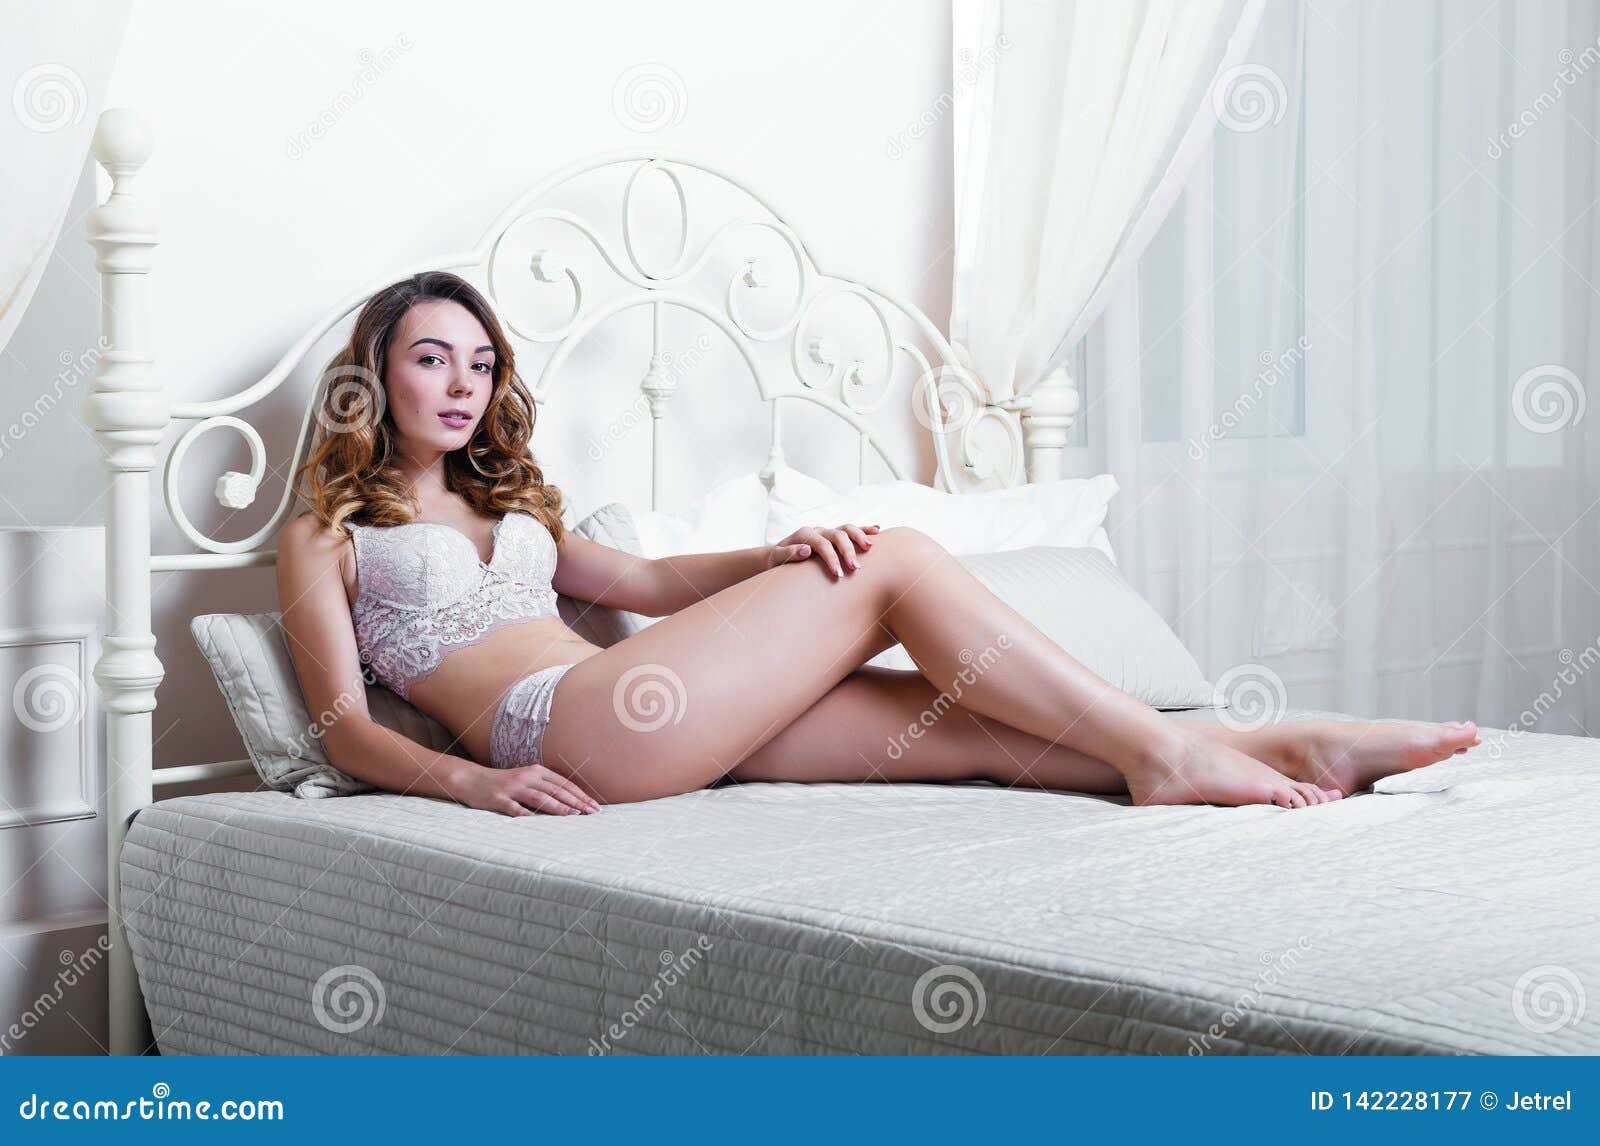 sexy beautiful young woman underwear lying